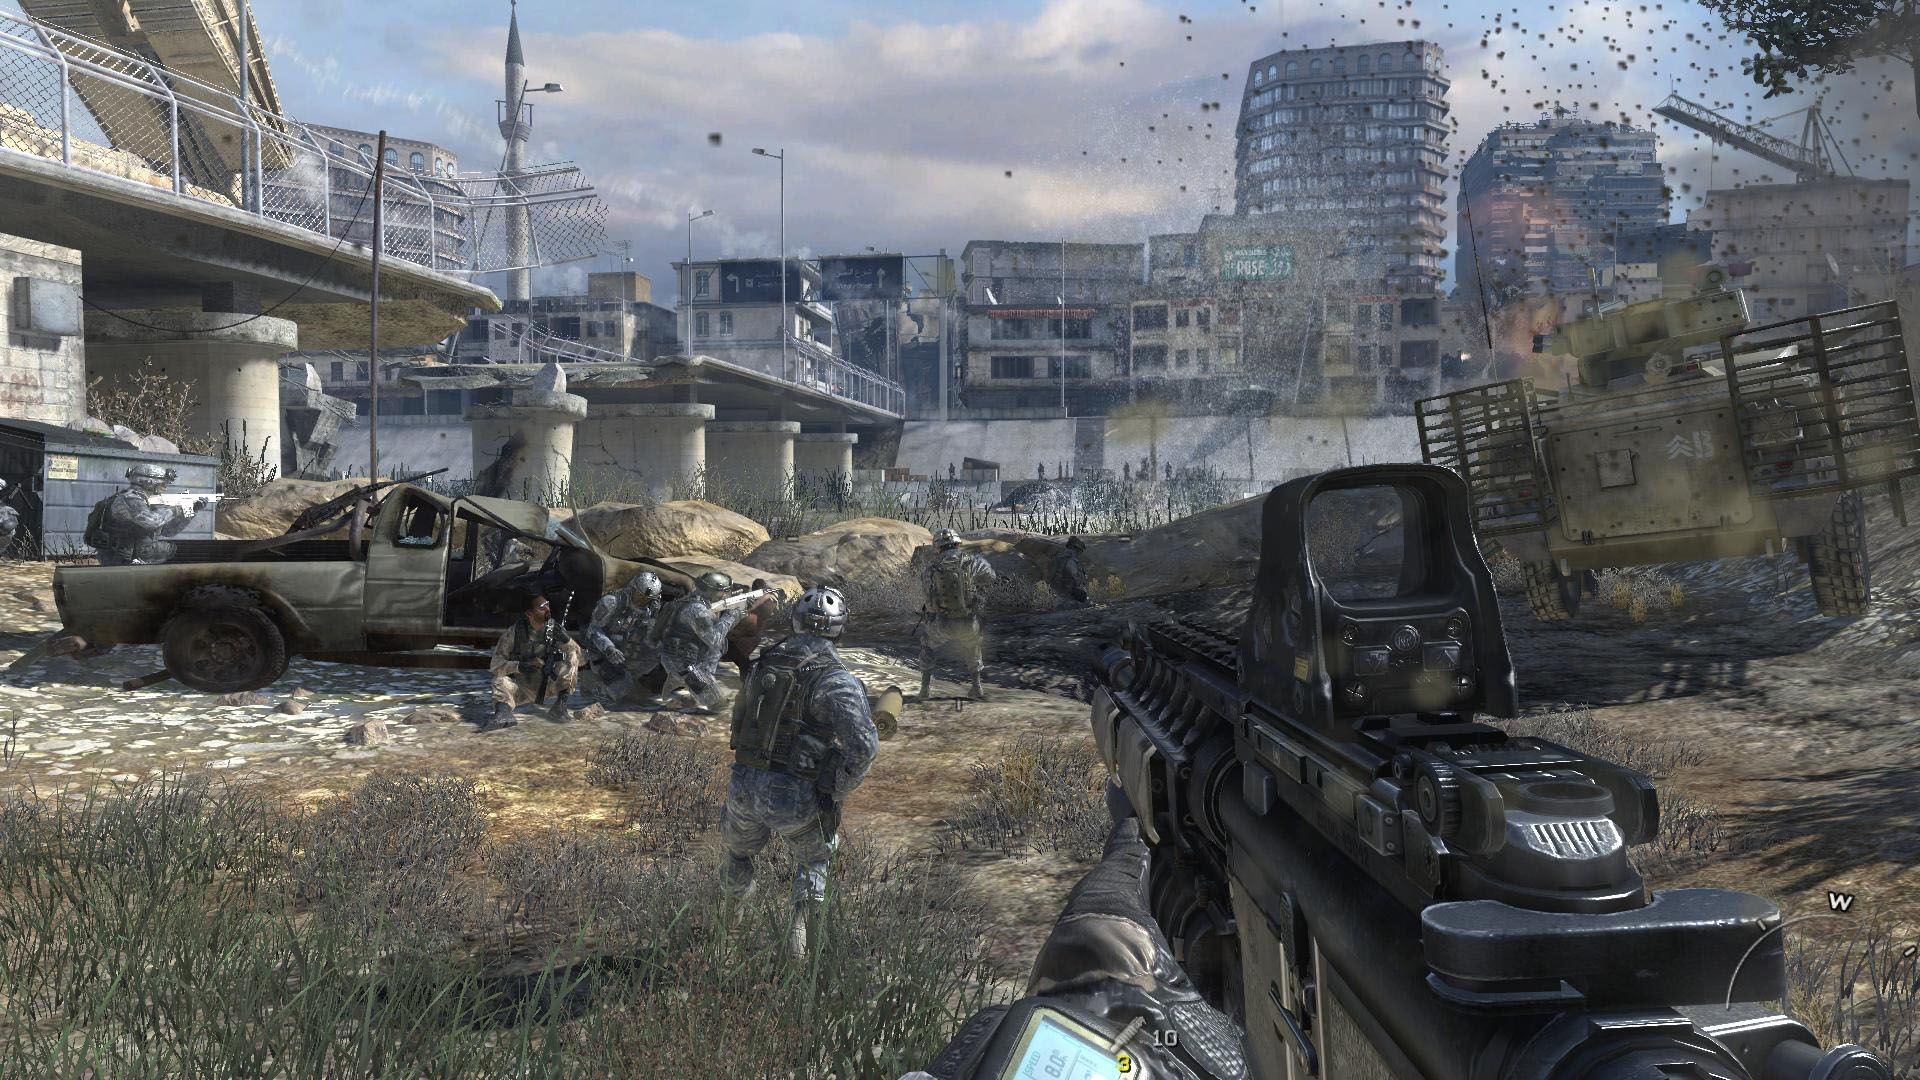 Remaster de Call of Duty Modern Warfare 2 exige 80 GB de armazenamento no  PC, dobro do PS4